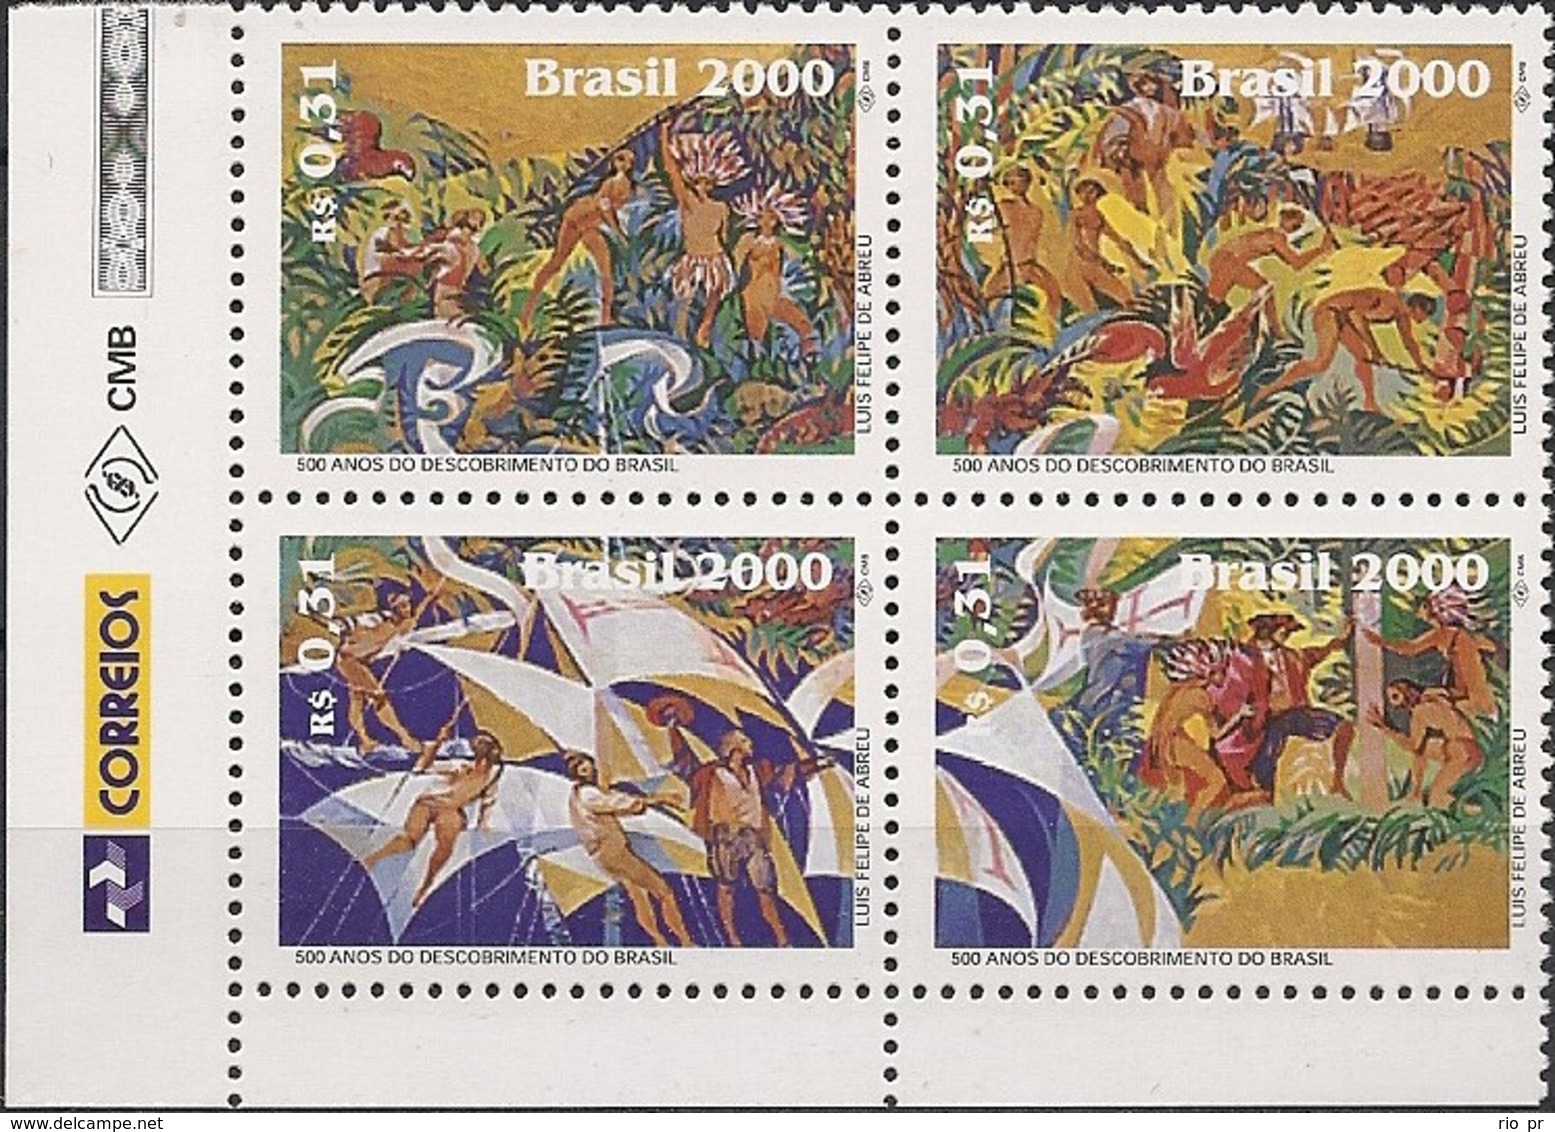 BRAZIL - BLOCK OF 4 DISCOVERY OF BRAZIL, 500th ANNIVERSARY (BOTTOM LEFT CORNER) 2000 - MNH - Neufs